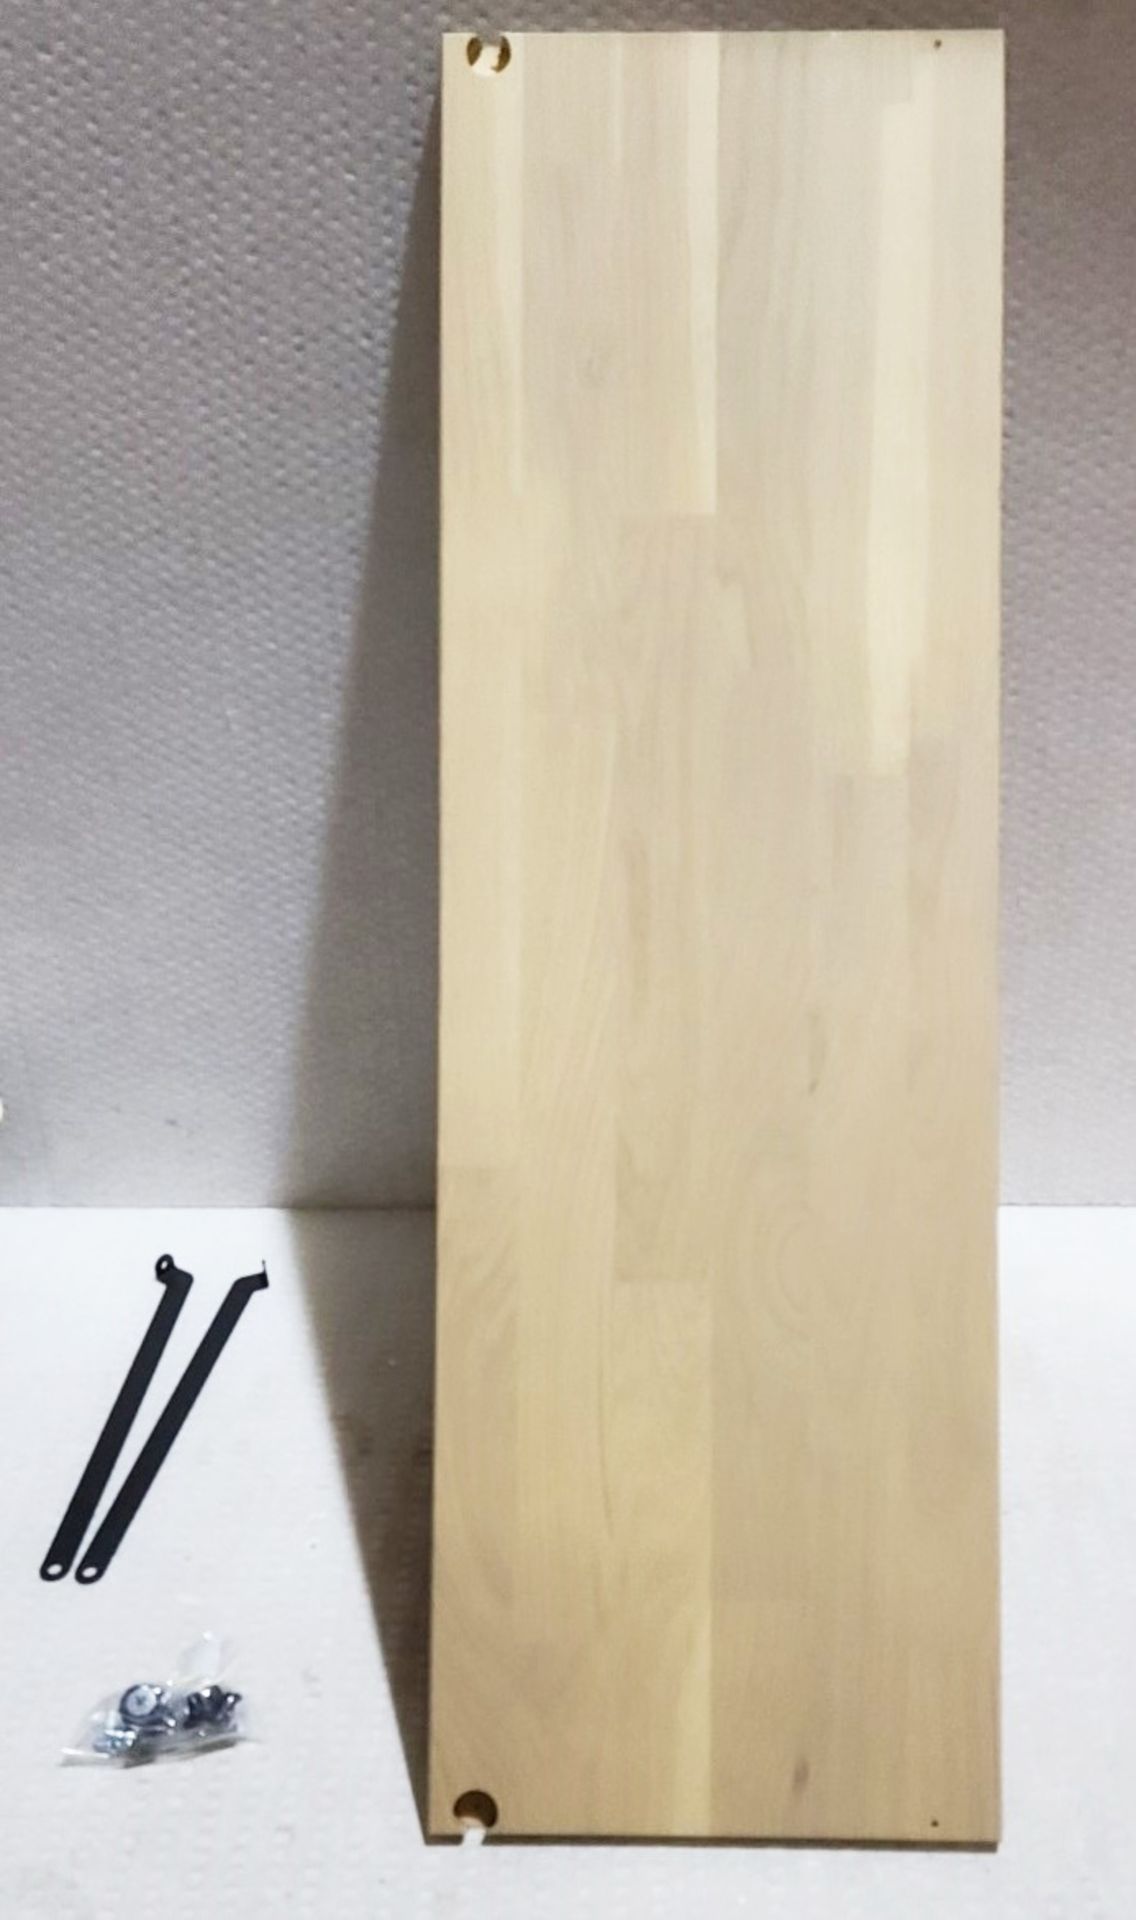 1 x WOOOD 'Gyan Legplank' Light Oak Shelf With Black Metal Braces 80cm - Image 2 of 7